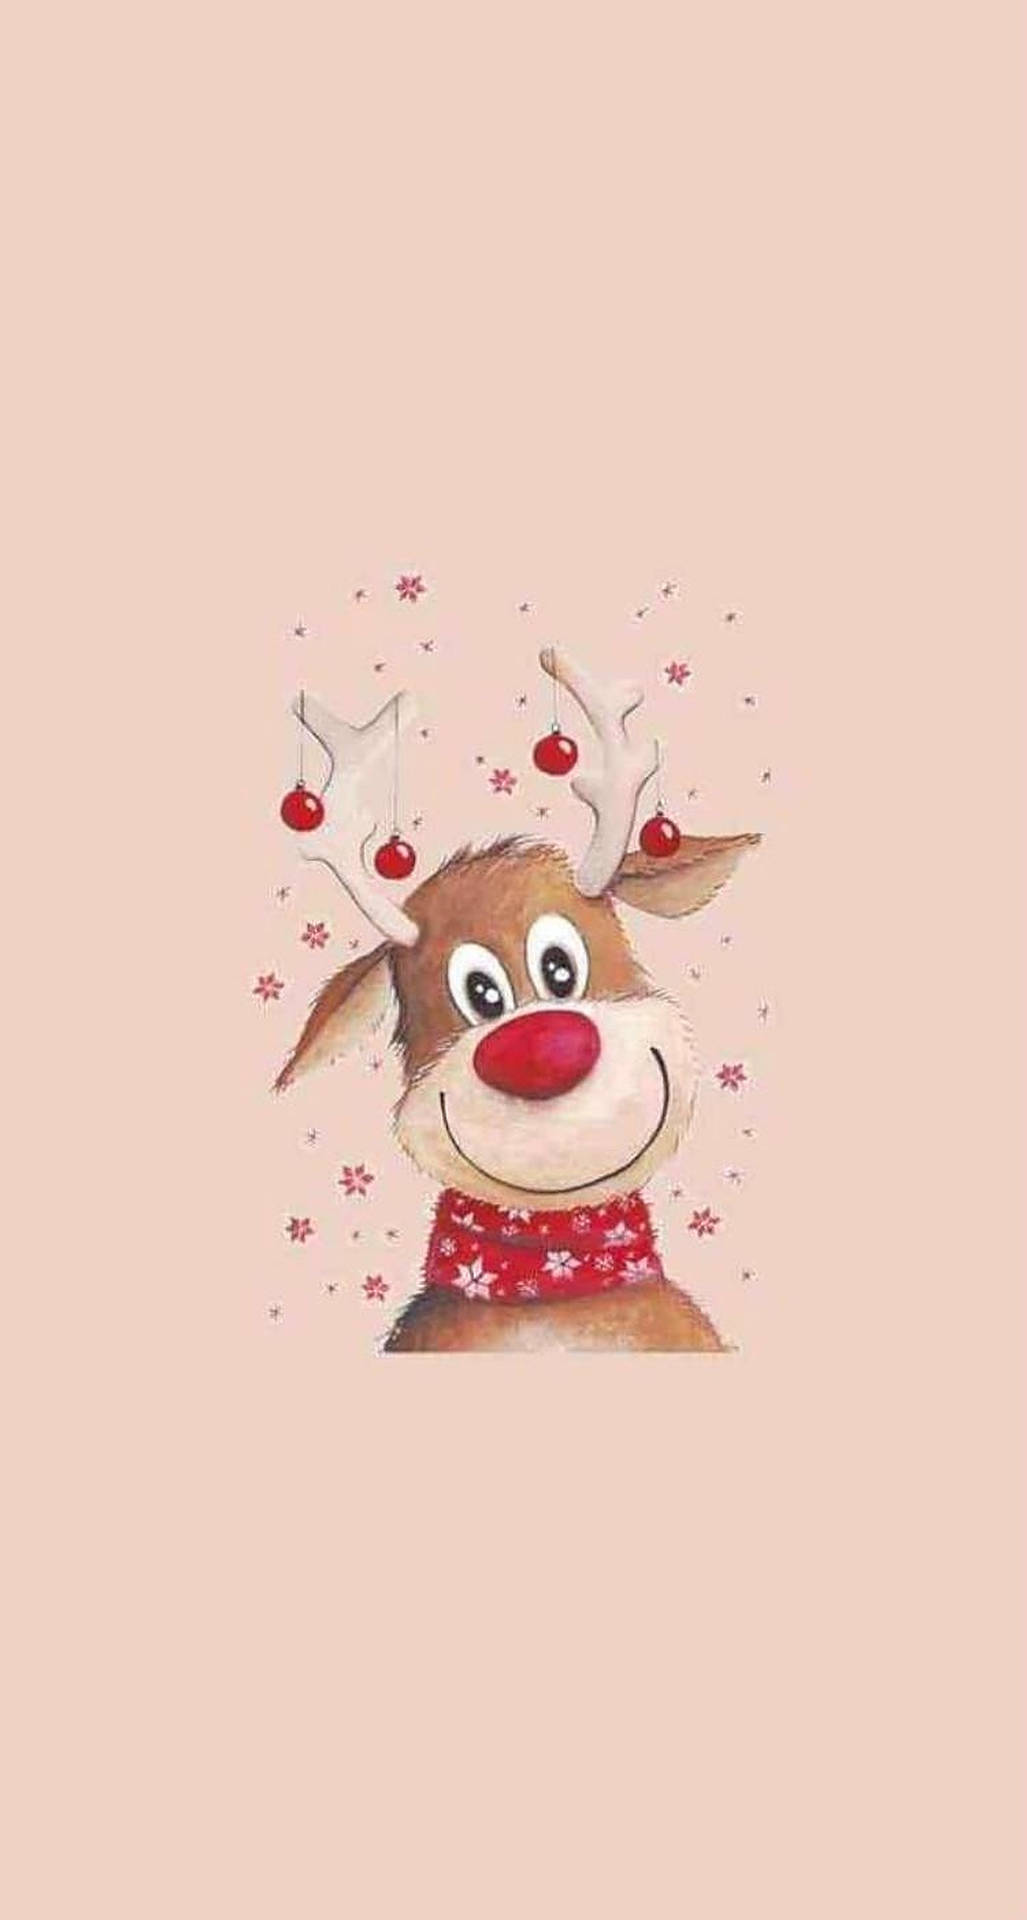 Cute Christmas Reindeer With Scarf Wallpaper